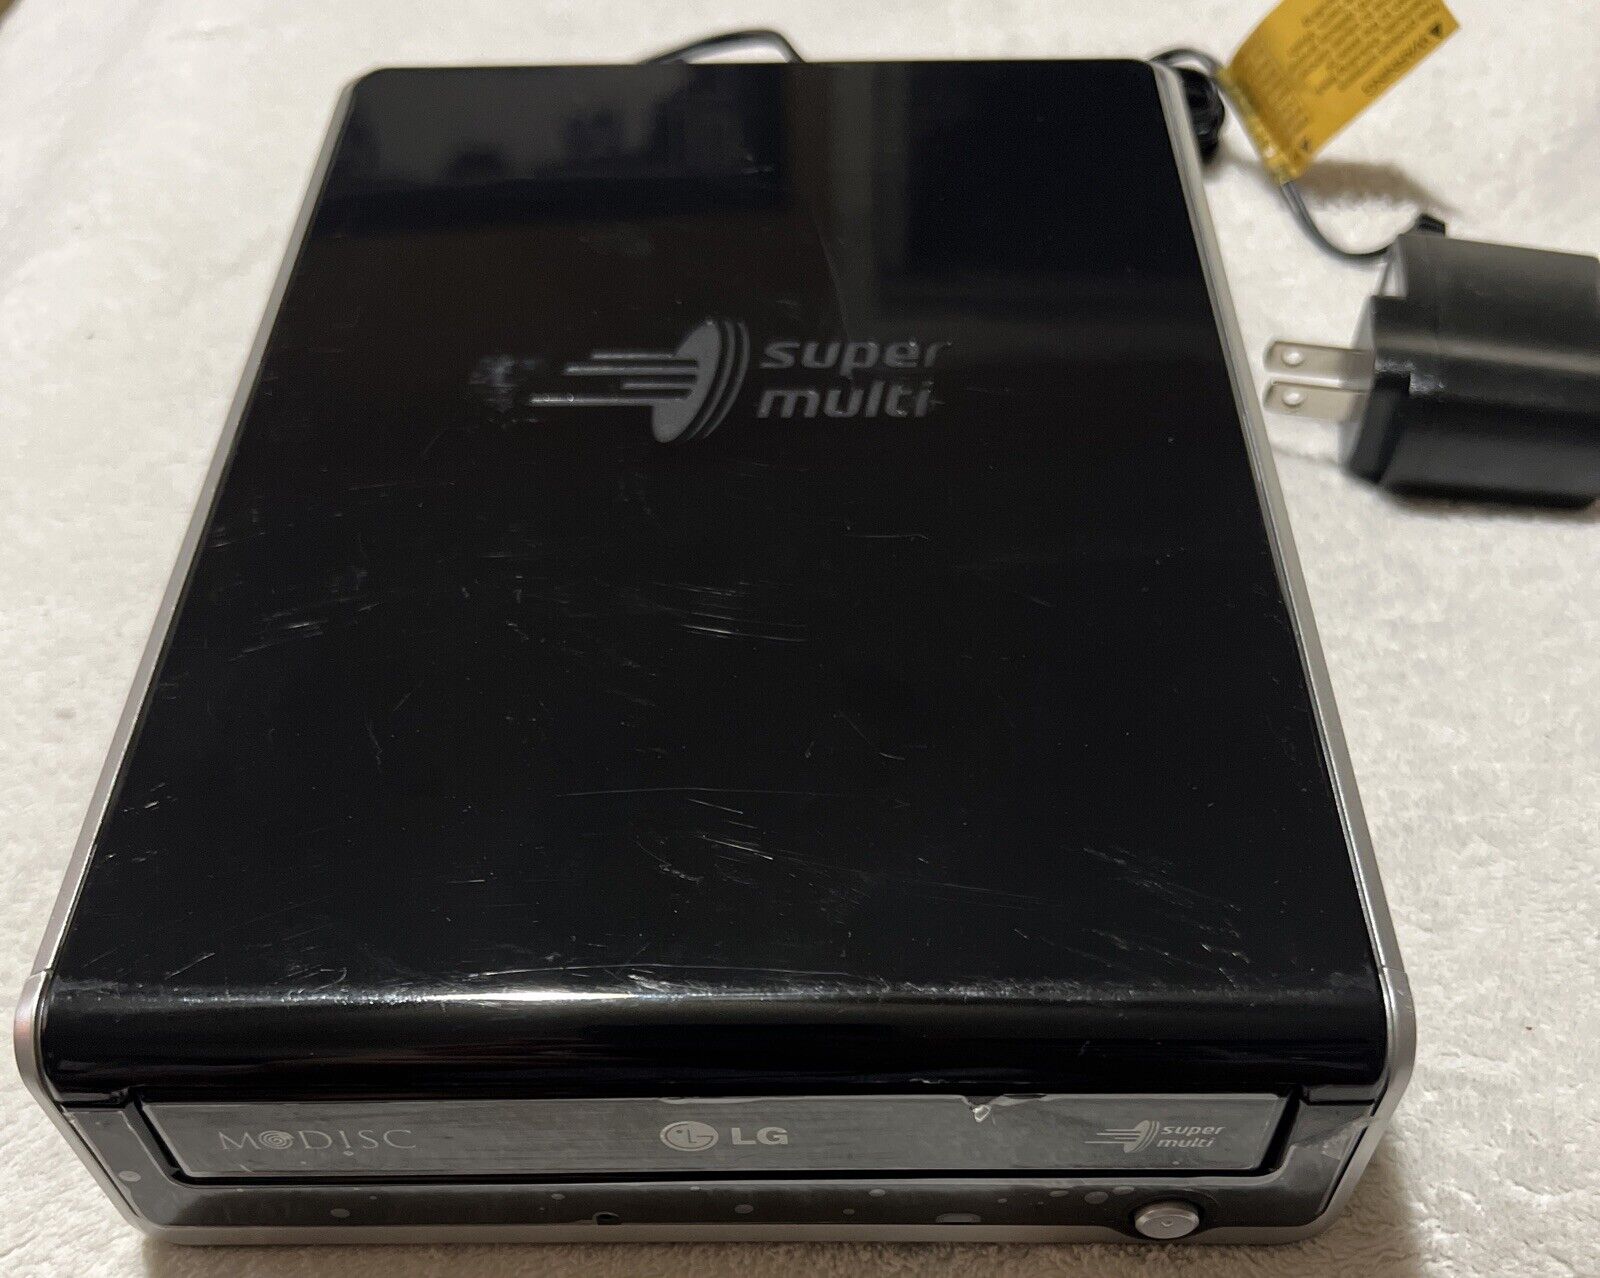 LG GE24NU40 Super Multi External USB 2.0 24X DVD Rewriter - Tested Working